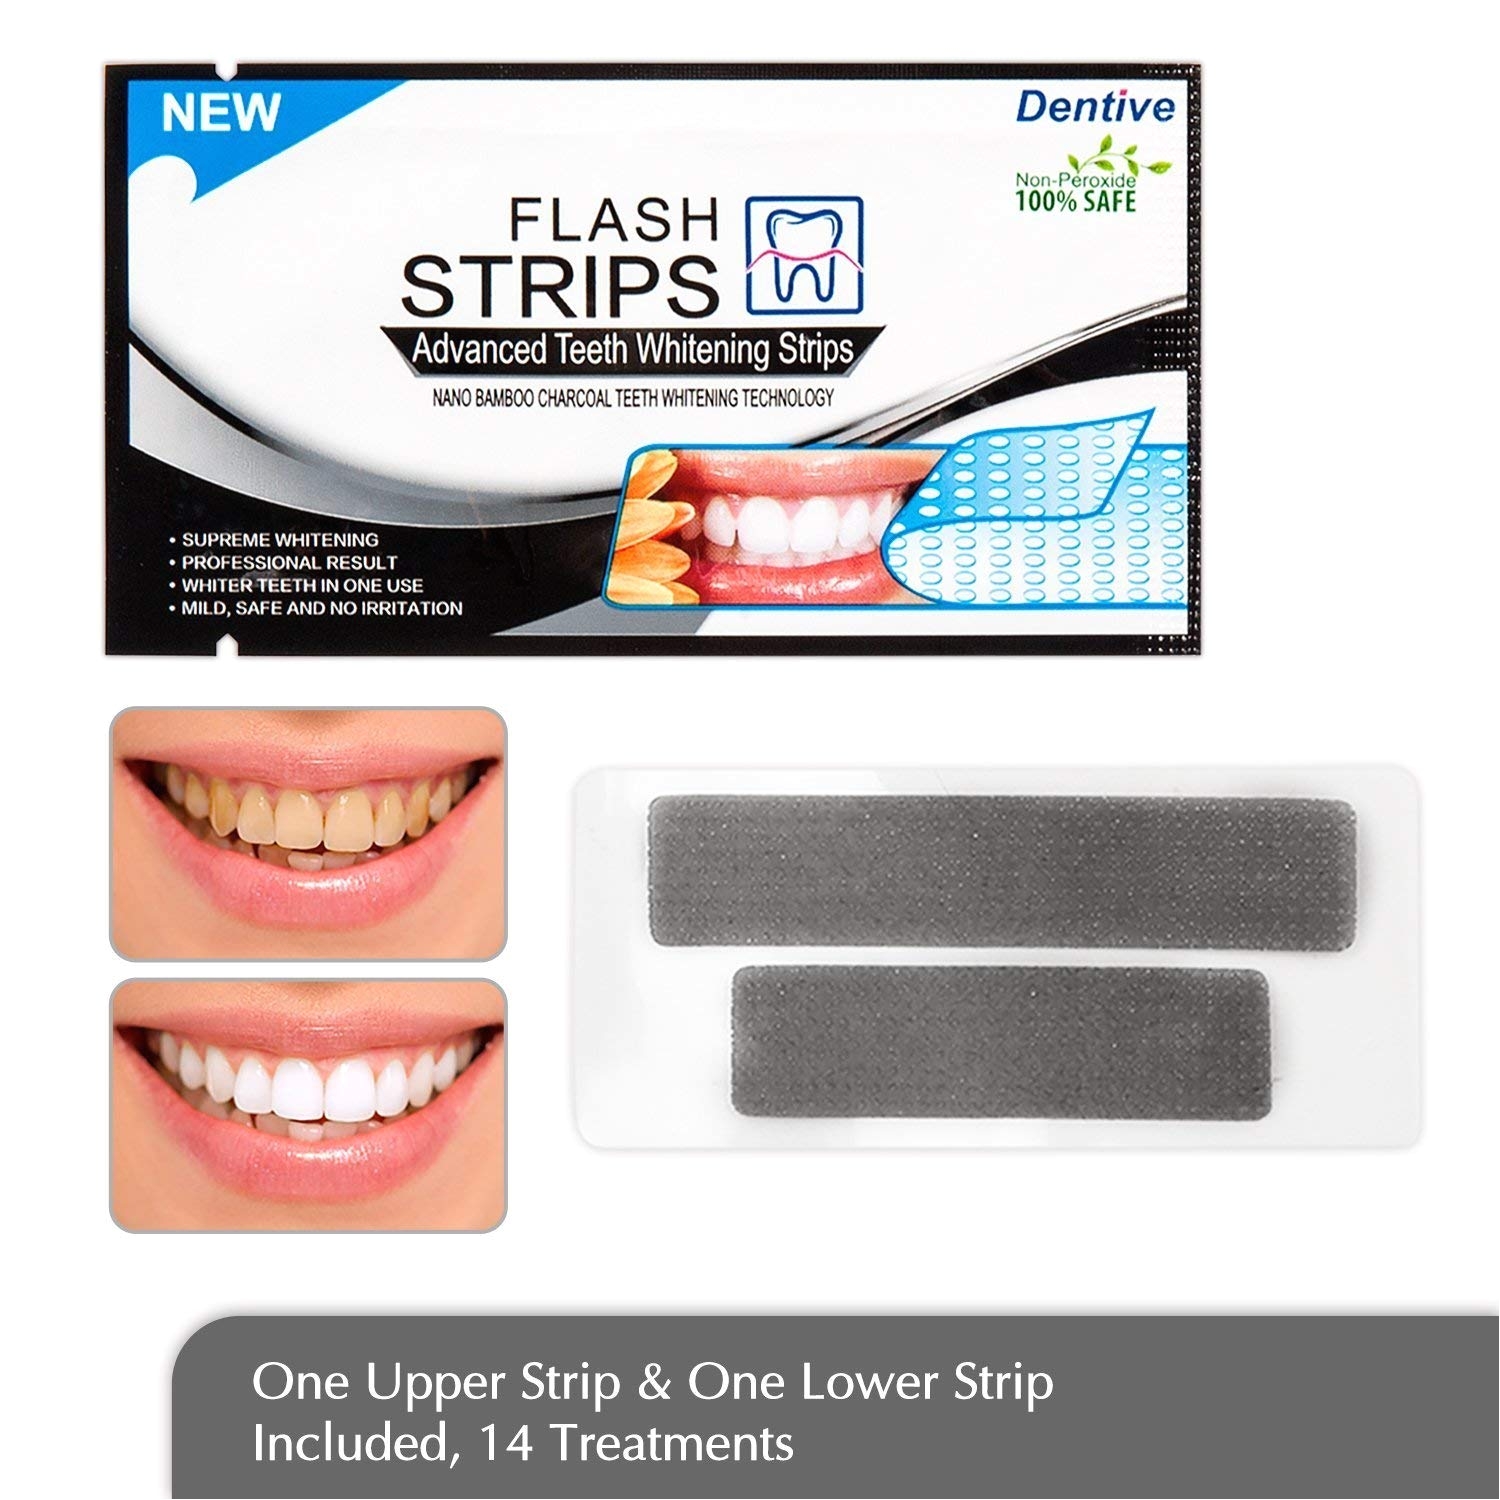 amazon com dentive white strips 28 teeth whitening strips w nano bamboo charcoal for professional effects 14 treatments flash strip beauty